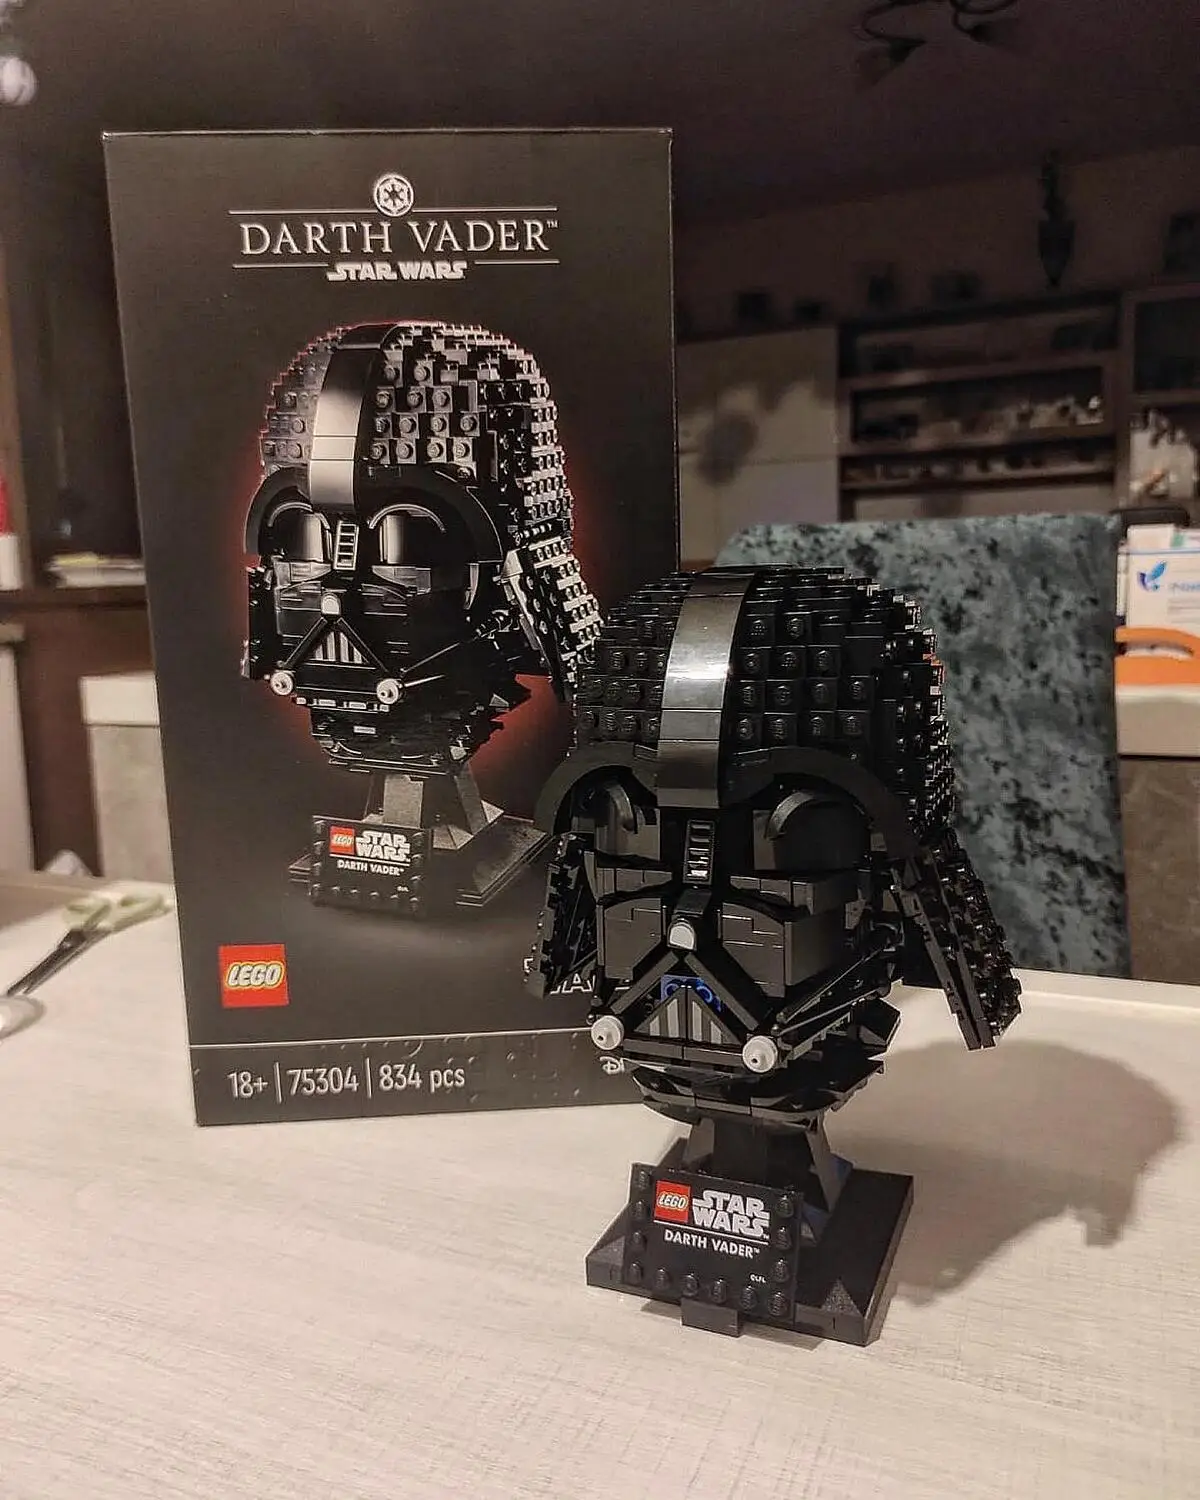 Ce set LEGO en promo à l'effigie du casque de Dark Vador va ravir